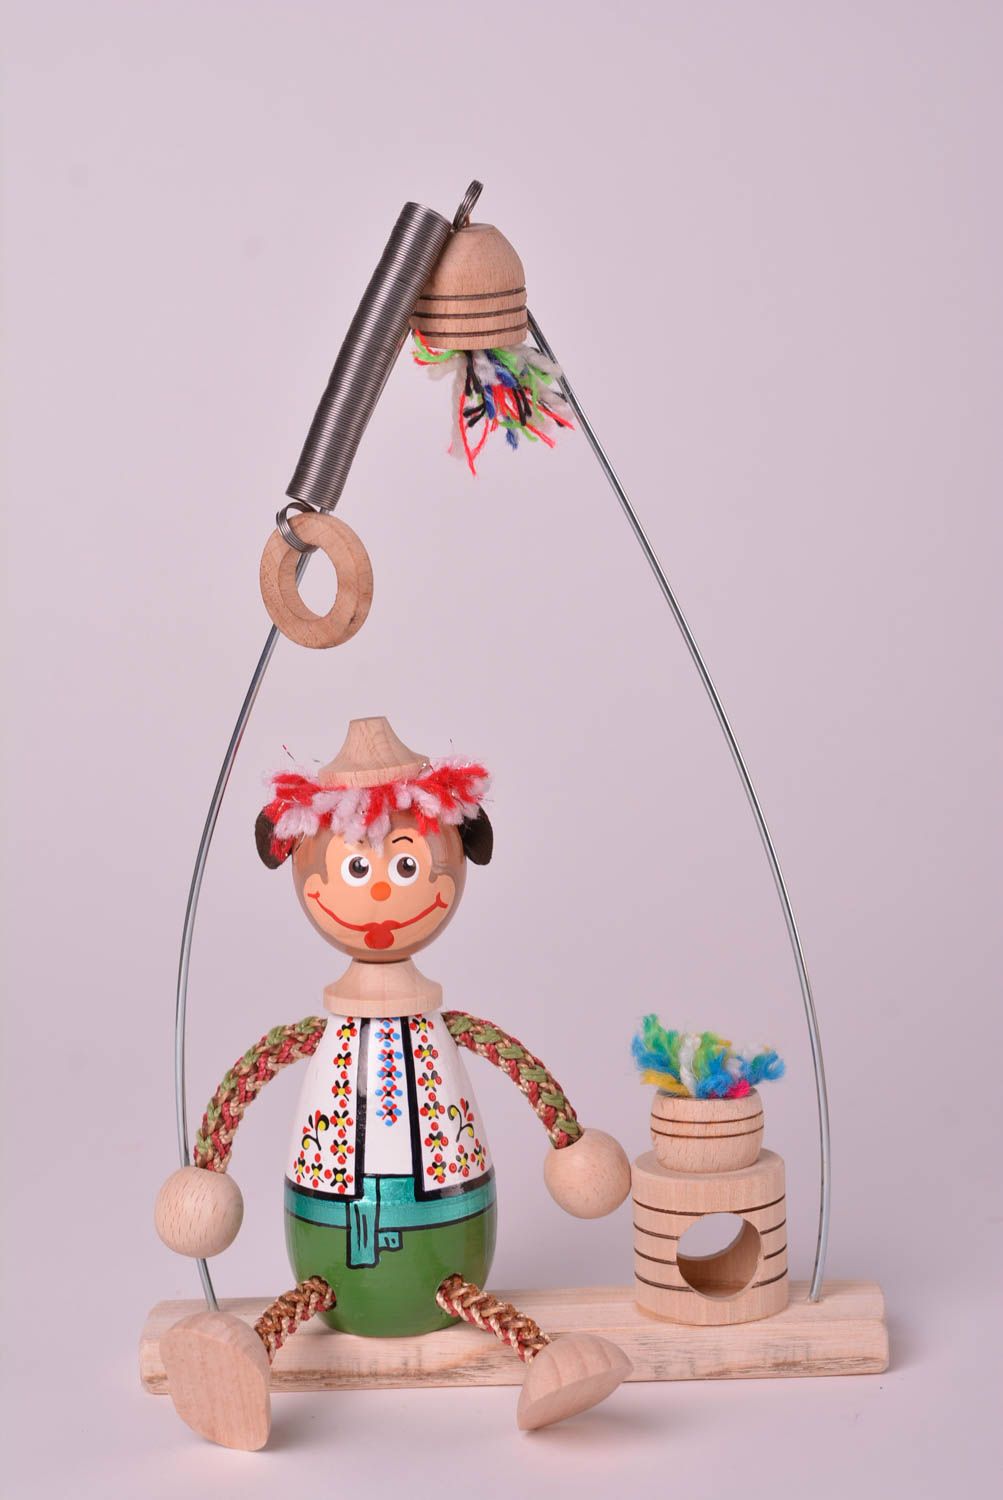 Handmade cute wooden toy unusual interior toy stylish nursery decoration photo 1